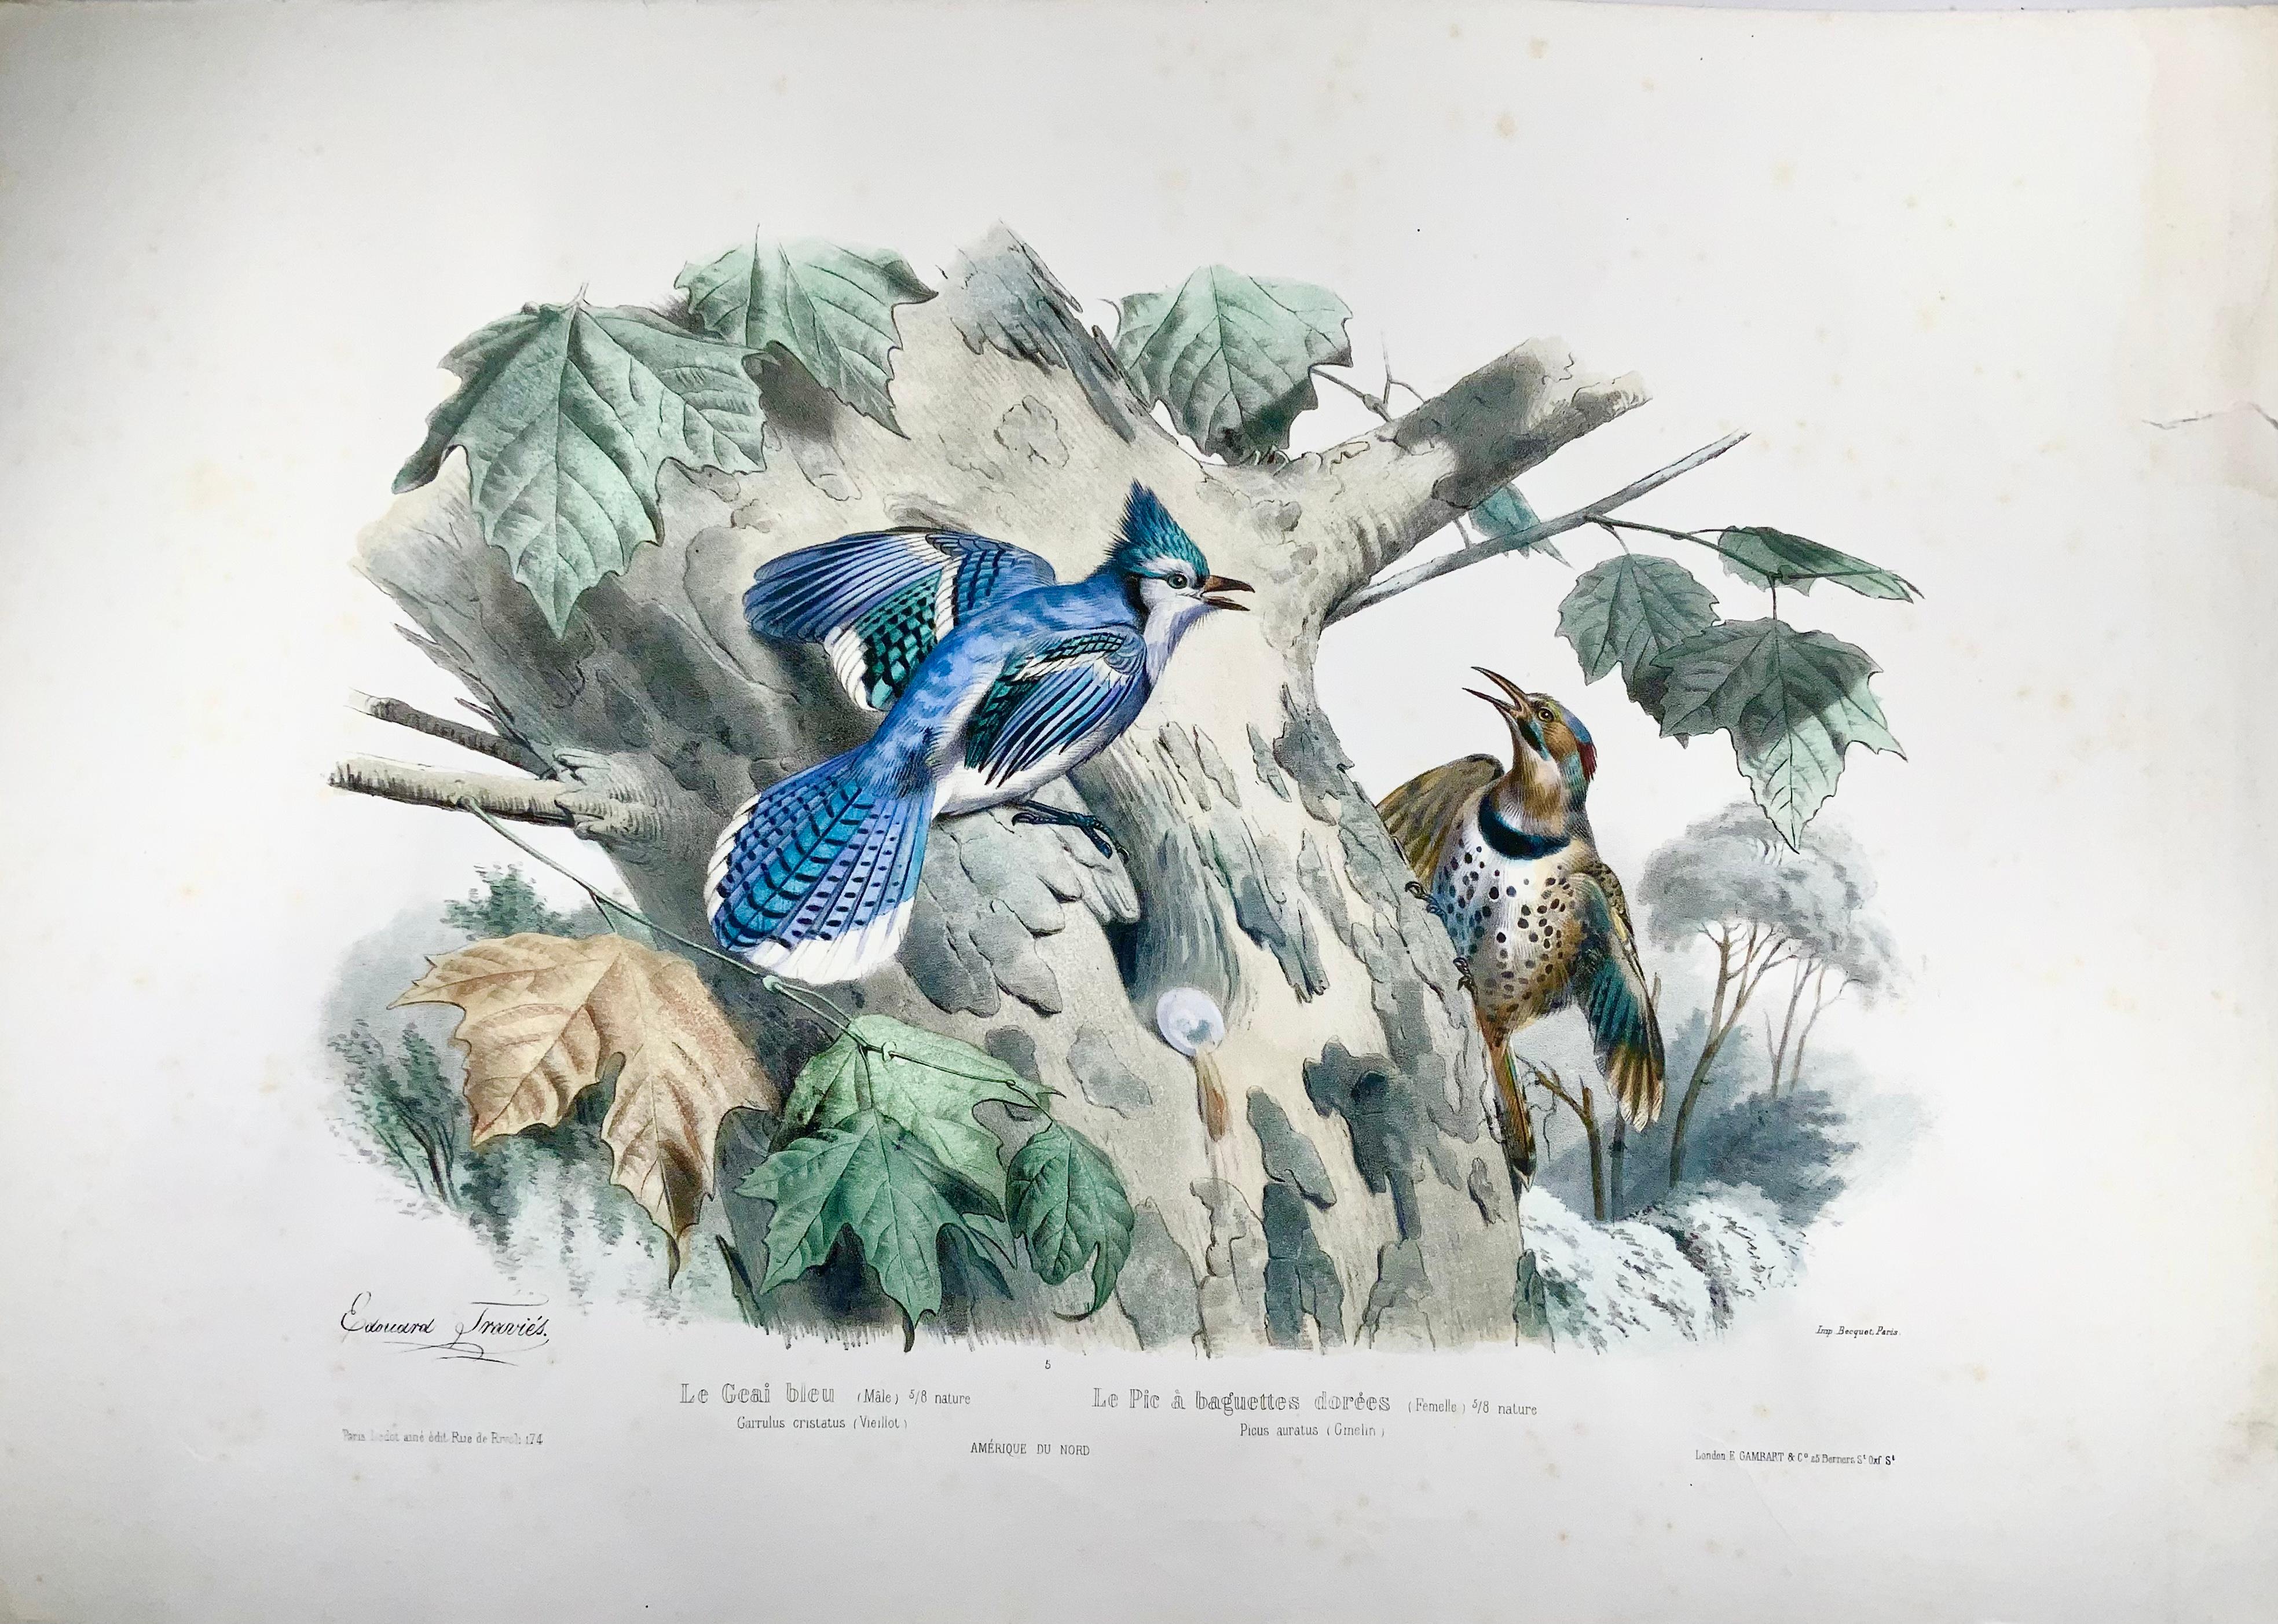 Swiss 1857 Ed Travies, Le Geai bleu, Le Pic, Ornithology For Sale